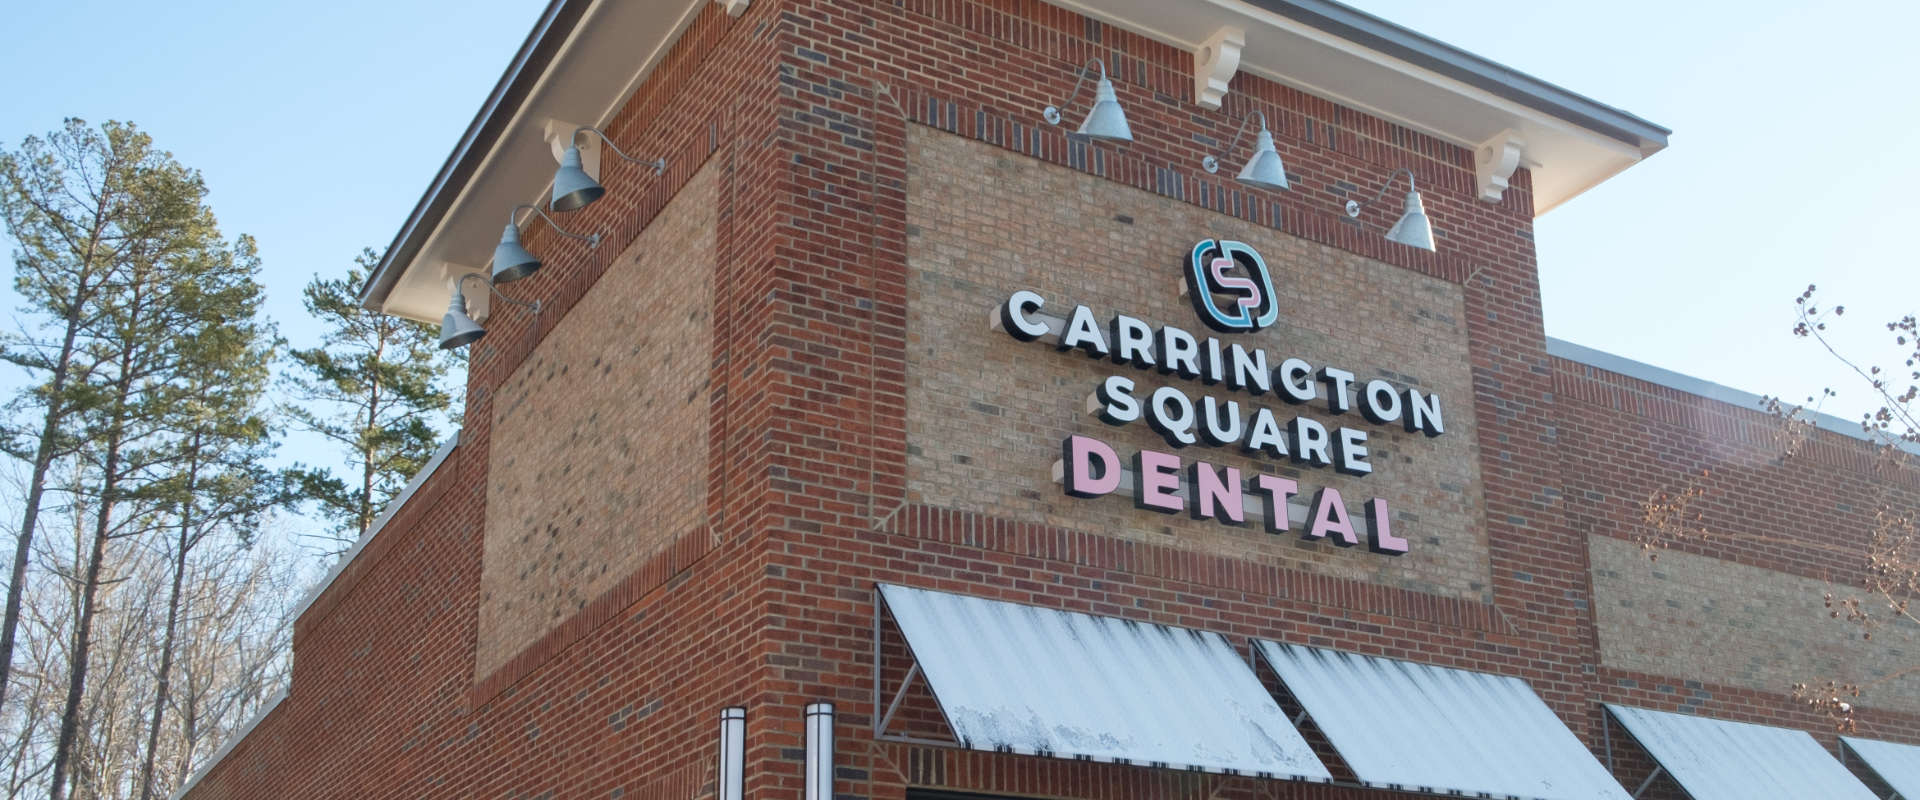 Carrington Square Dental office.